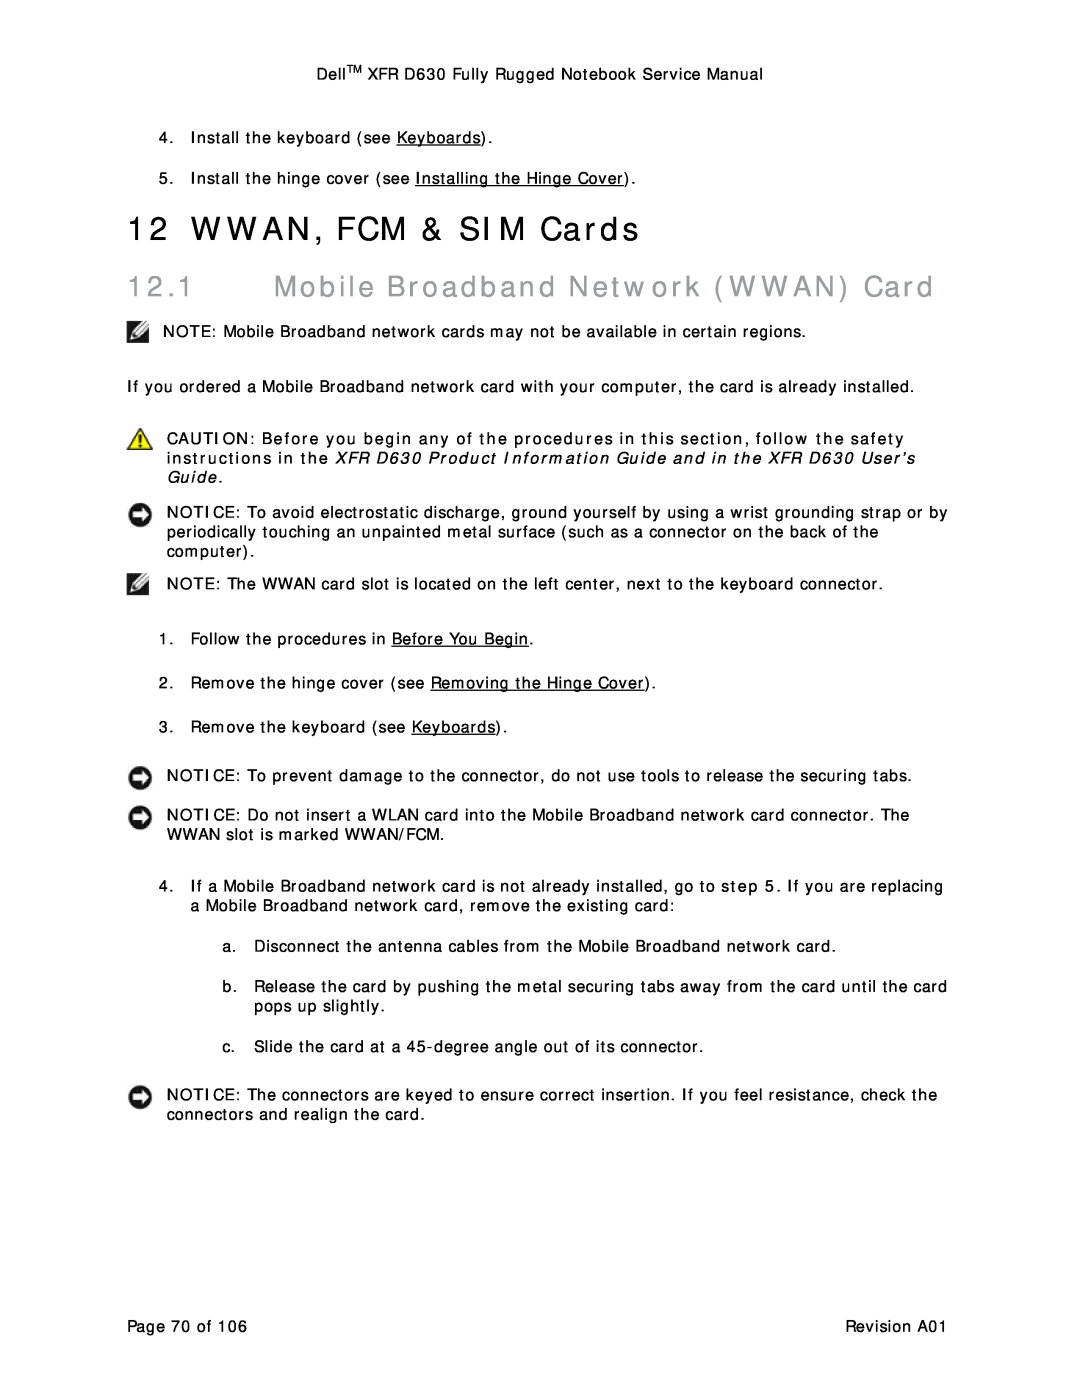 Dell D630 service manual WWAN, FCM & SIM Cards, Mobile Broadband Network WWAN Card 